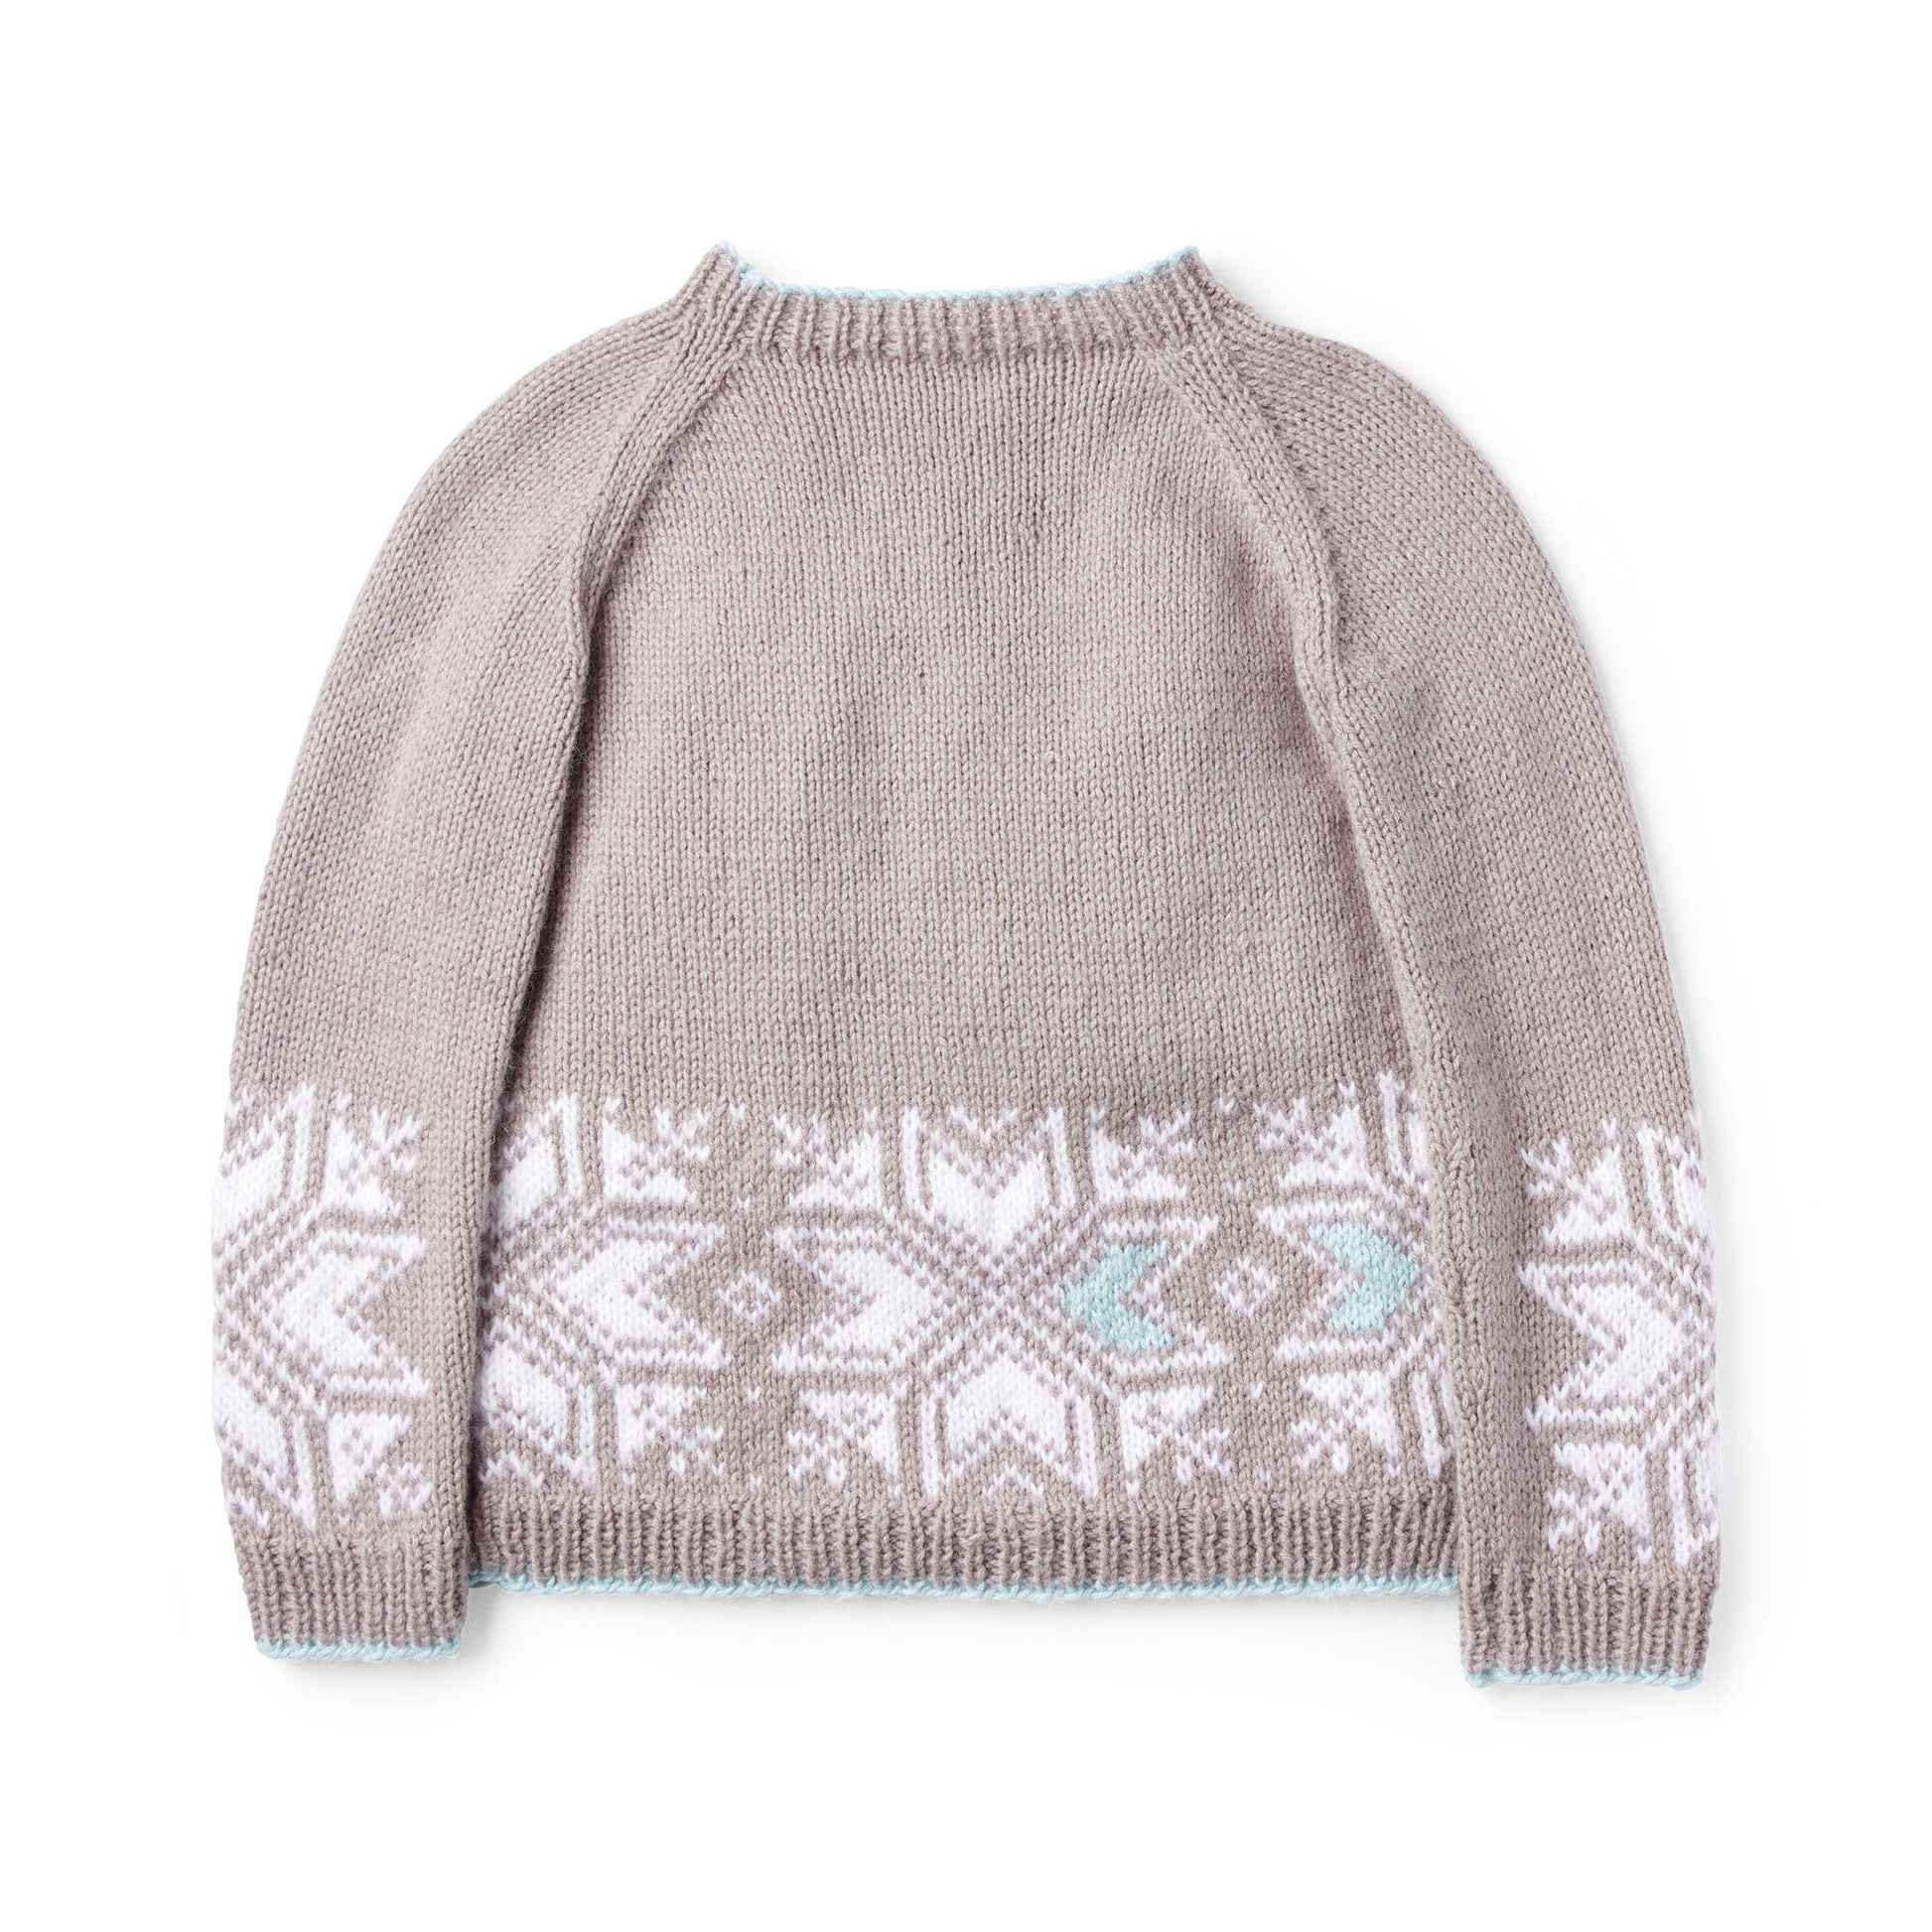 Free Patons Graphic Snowflake Knit Sweater Pattern